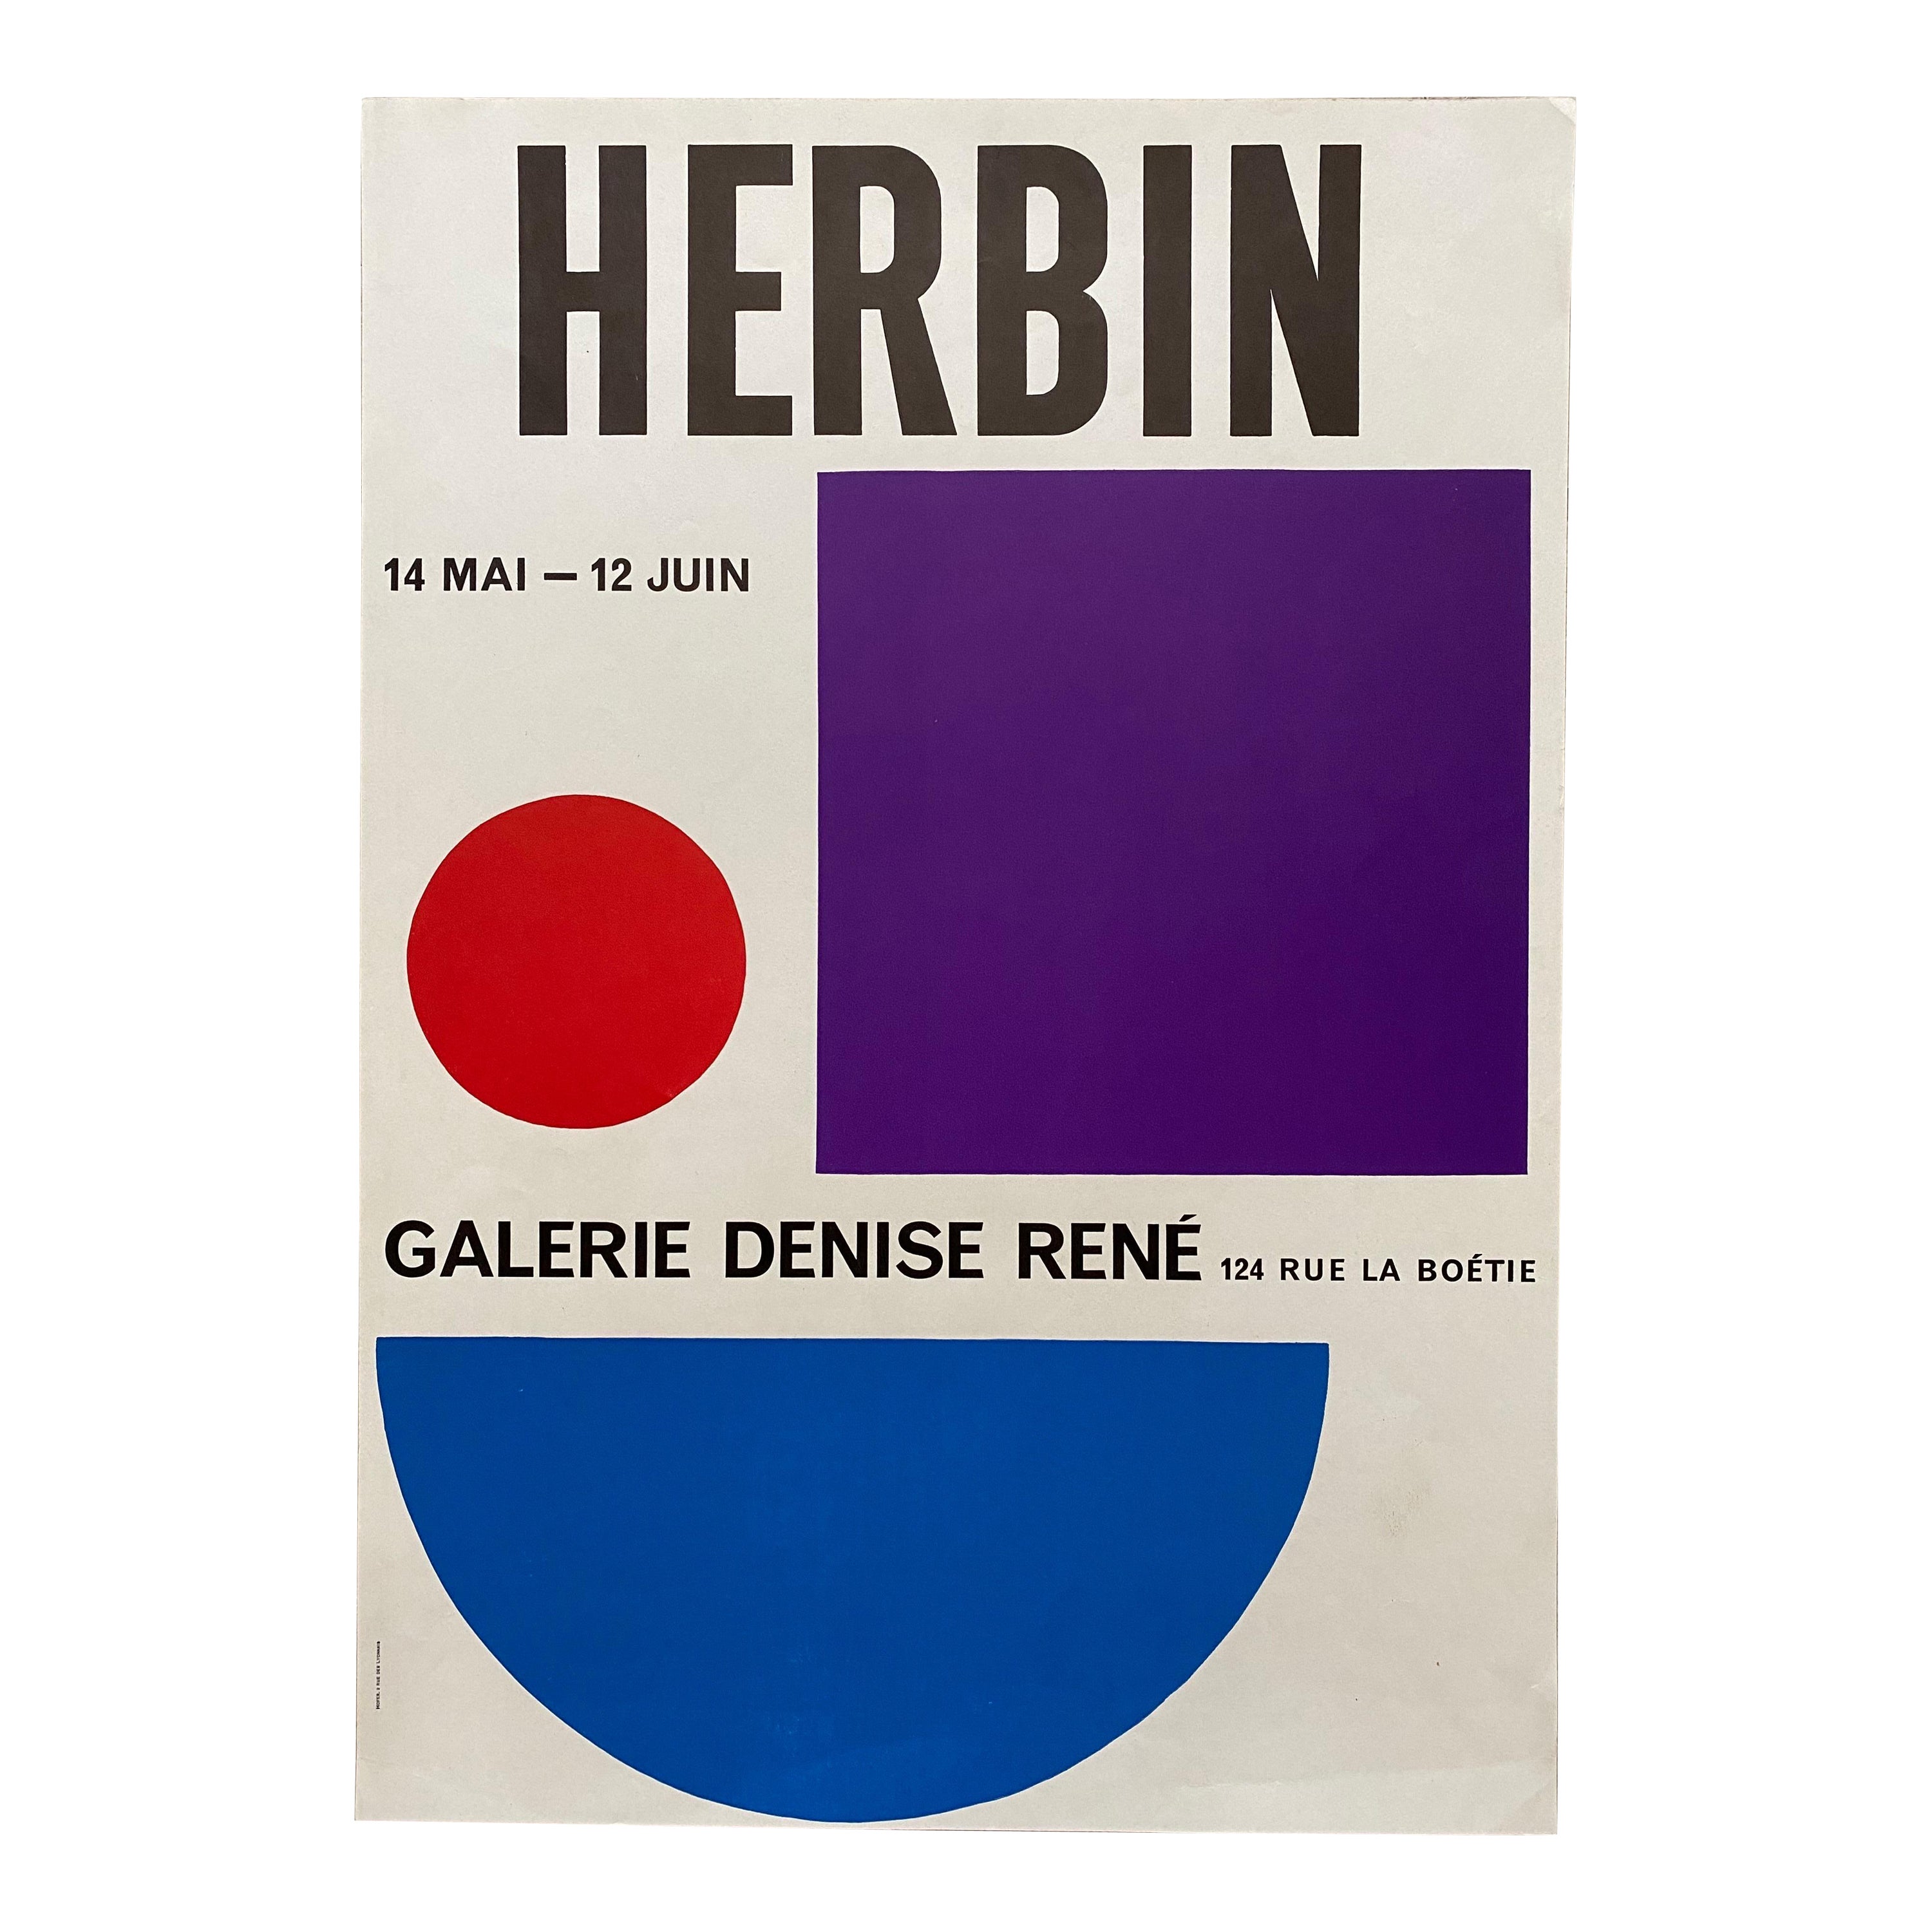 1954 Auguste Herbin Exhibition Print For Galerie Denise Rene, Paris  For Sale